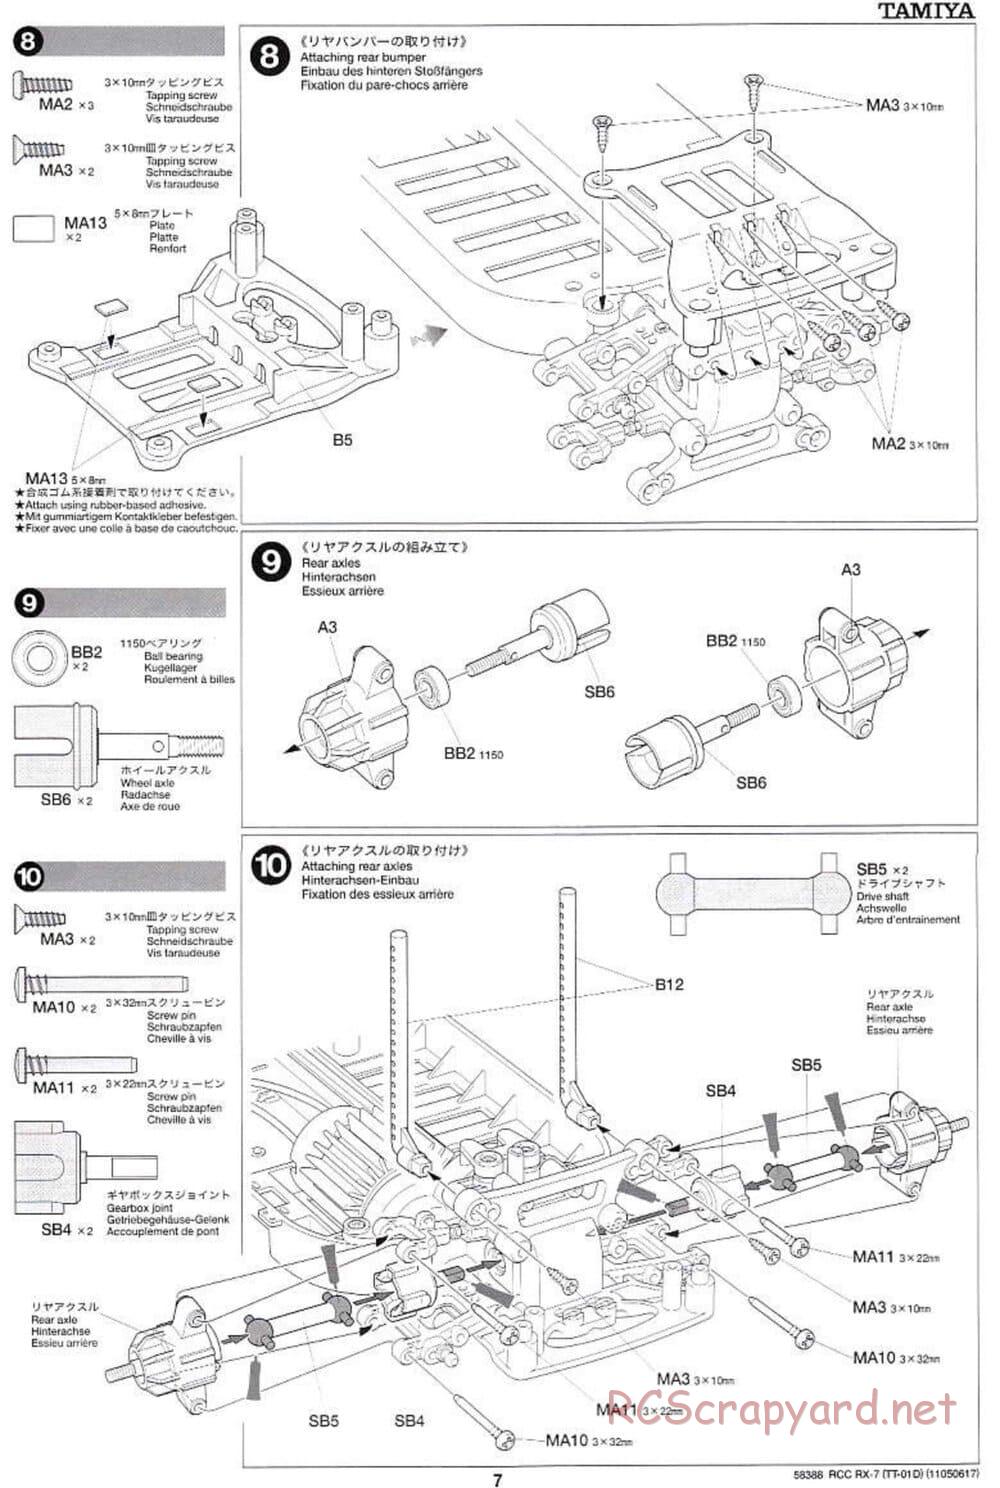 Tamiya - Mazda RX-7 - Drift Spec - TT-01D Chassis - Manual - Page 7